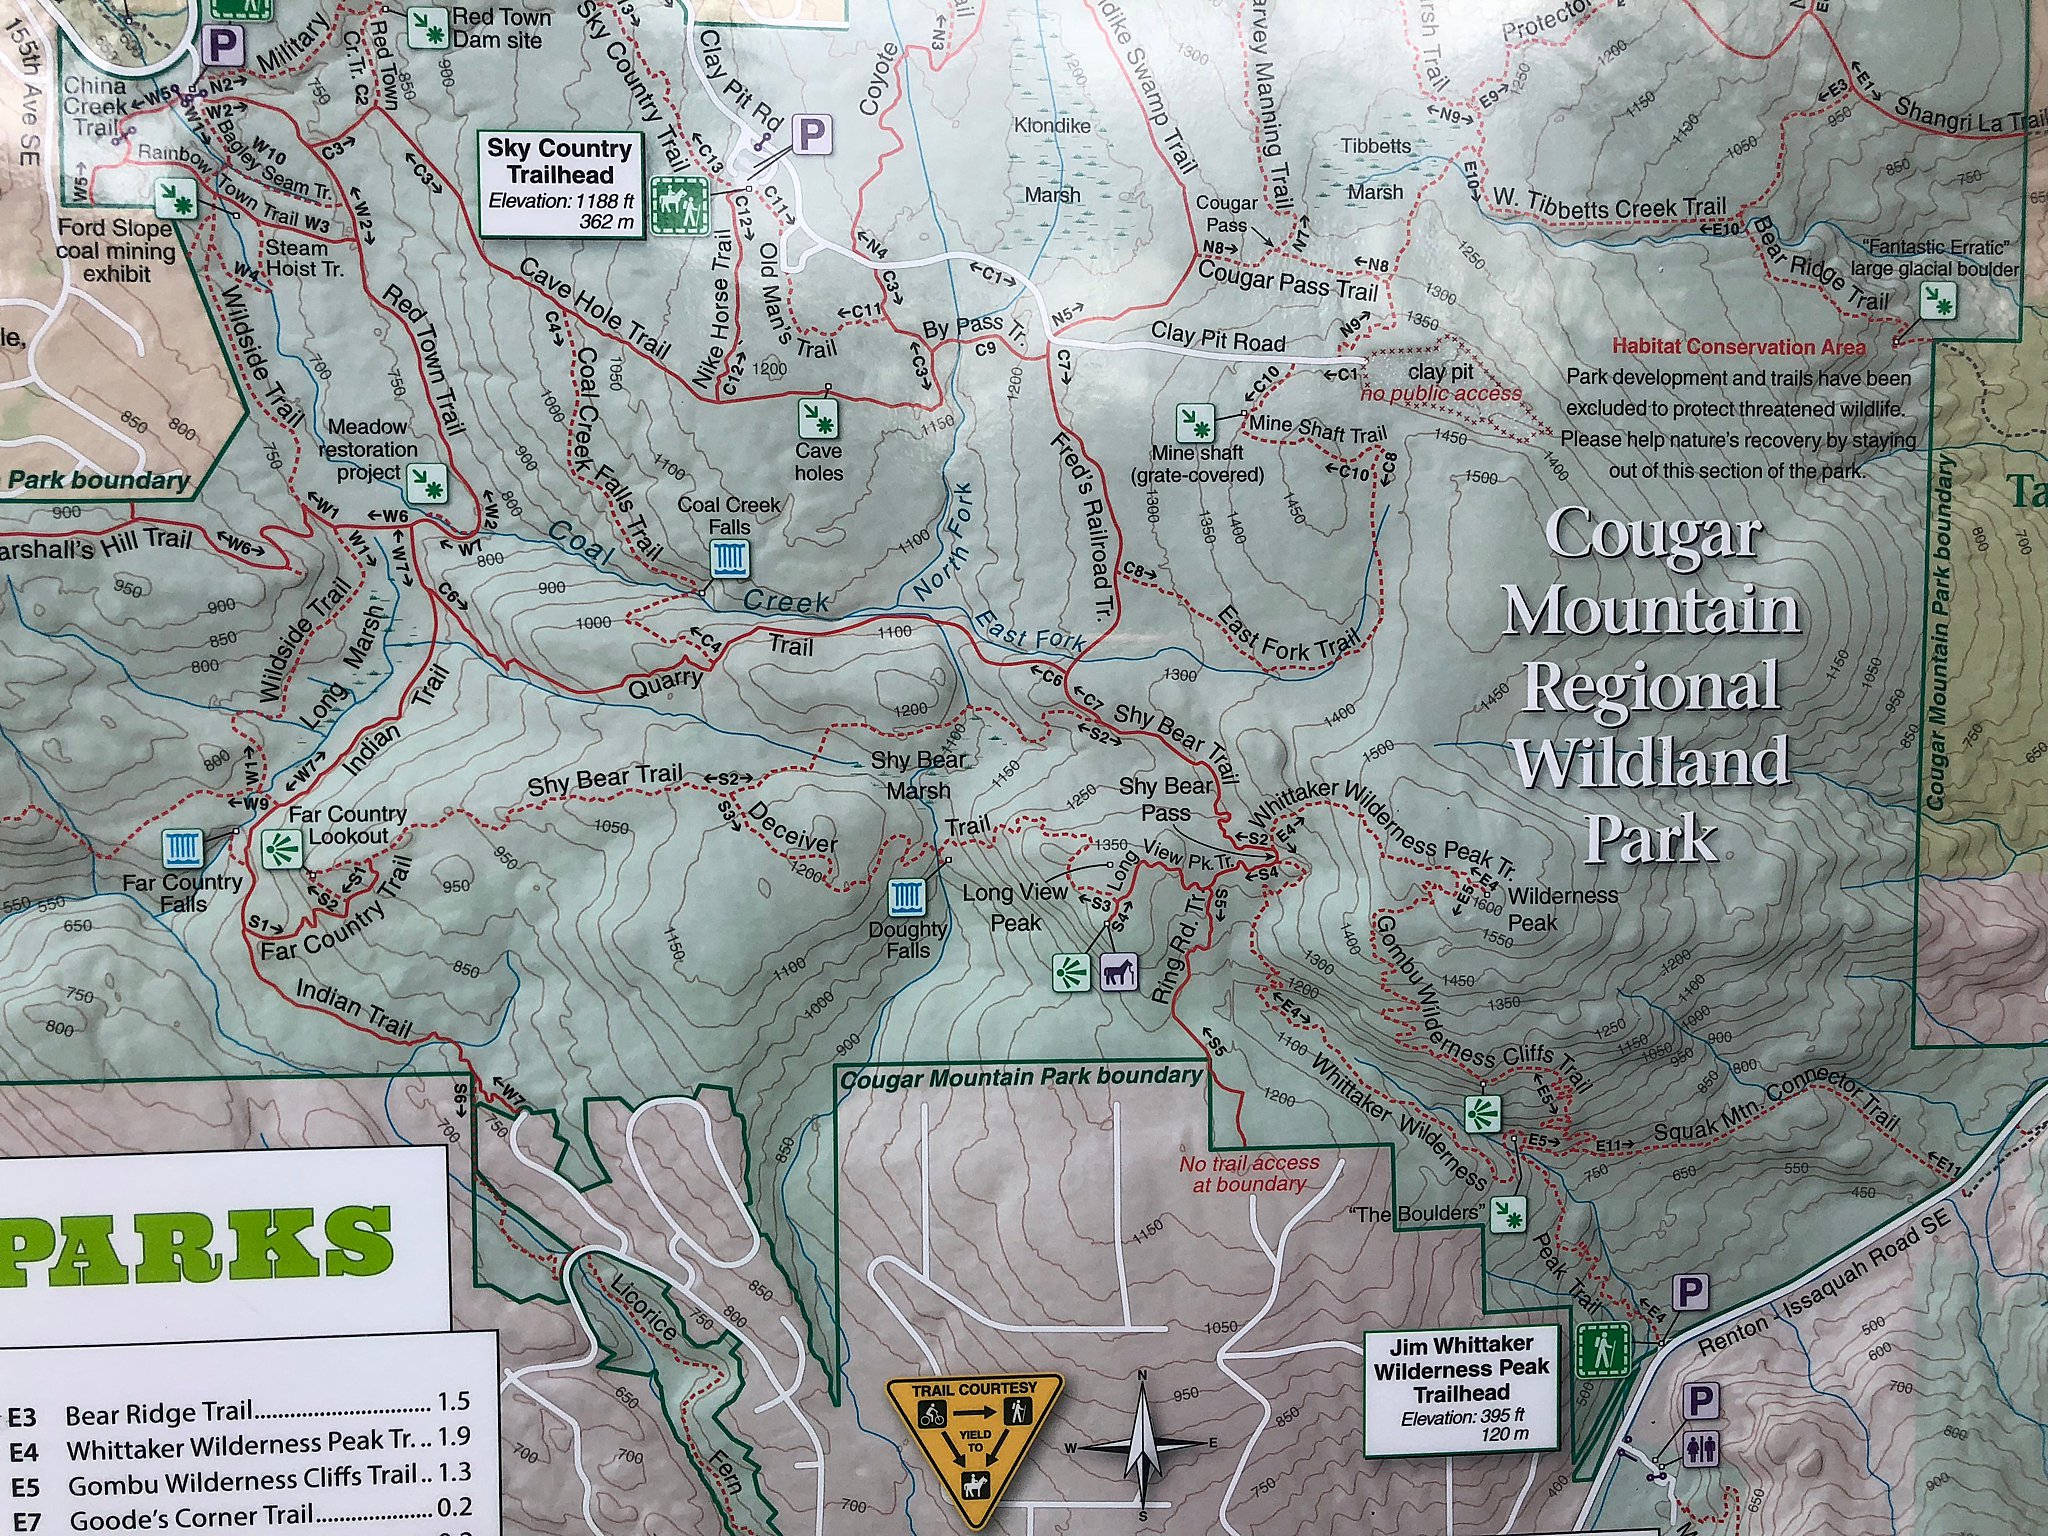 coal creek falls, Cougar Mountain Regional Wildlife Park, issaquah, issquah hiking, bellevue trails